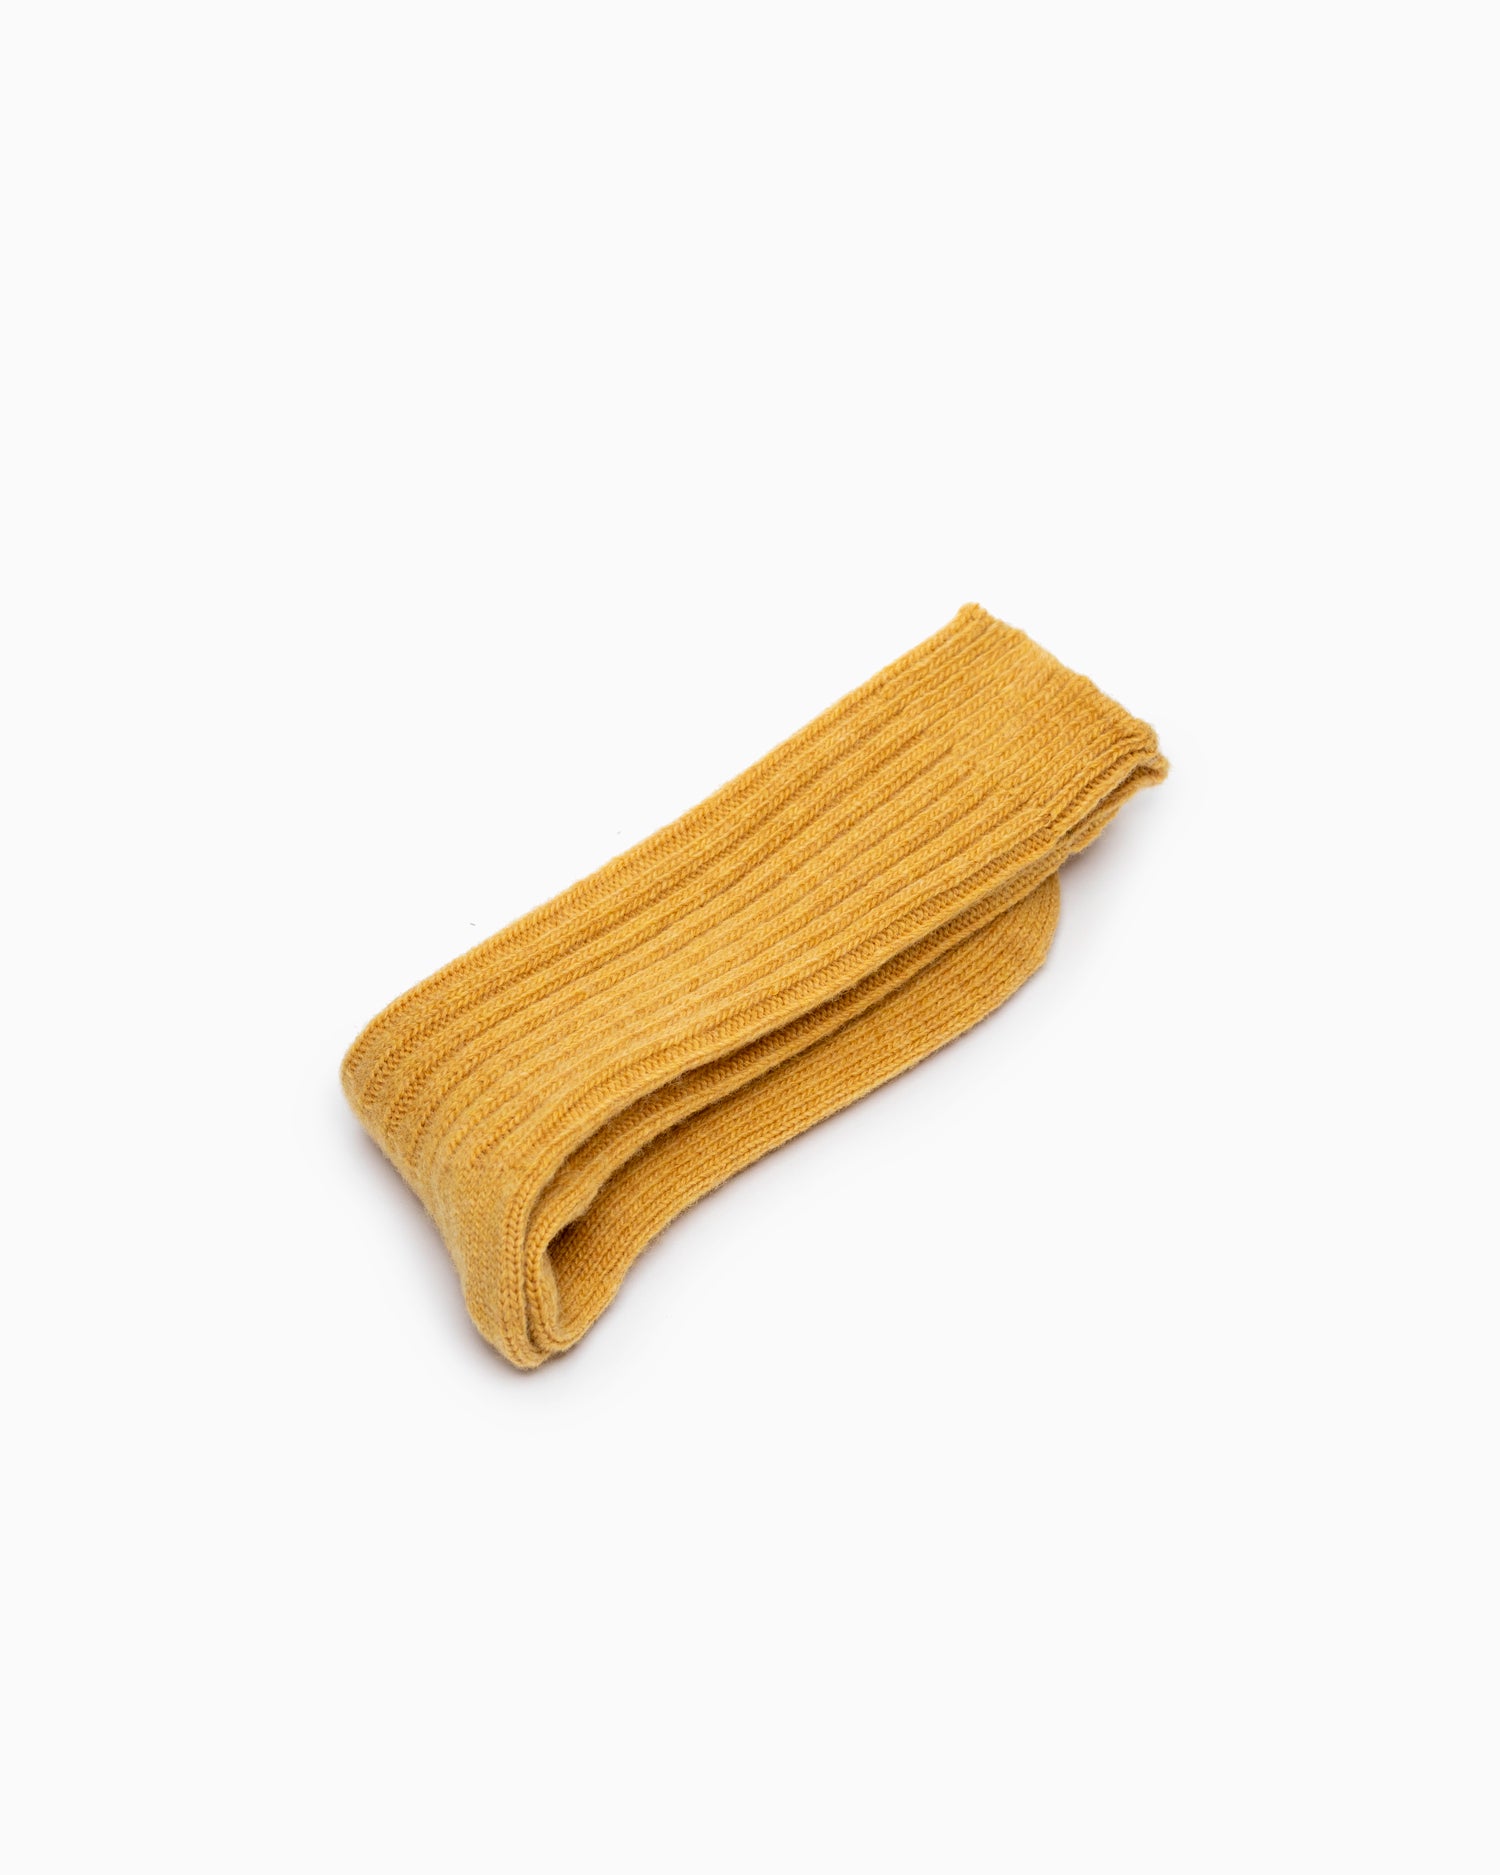 Mustard Yellow HJ Softop® Wool Socks